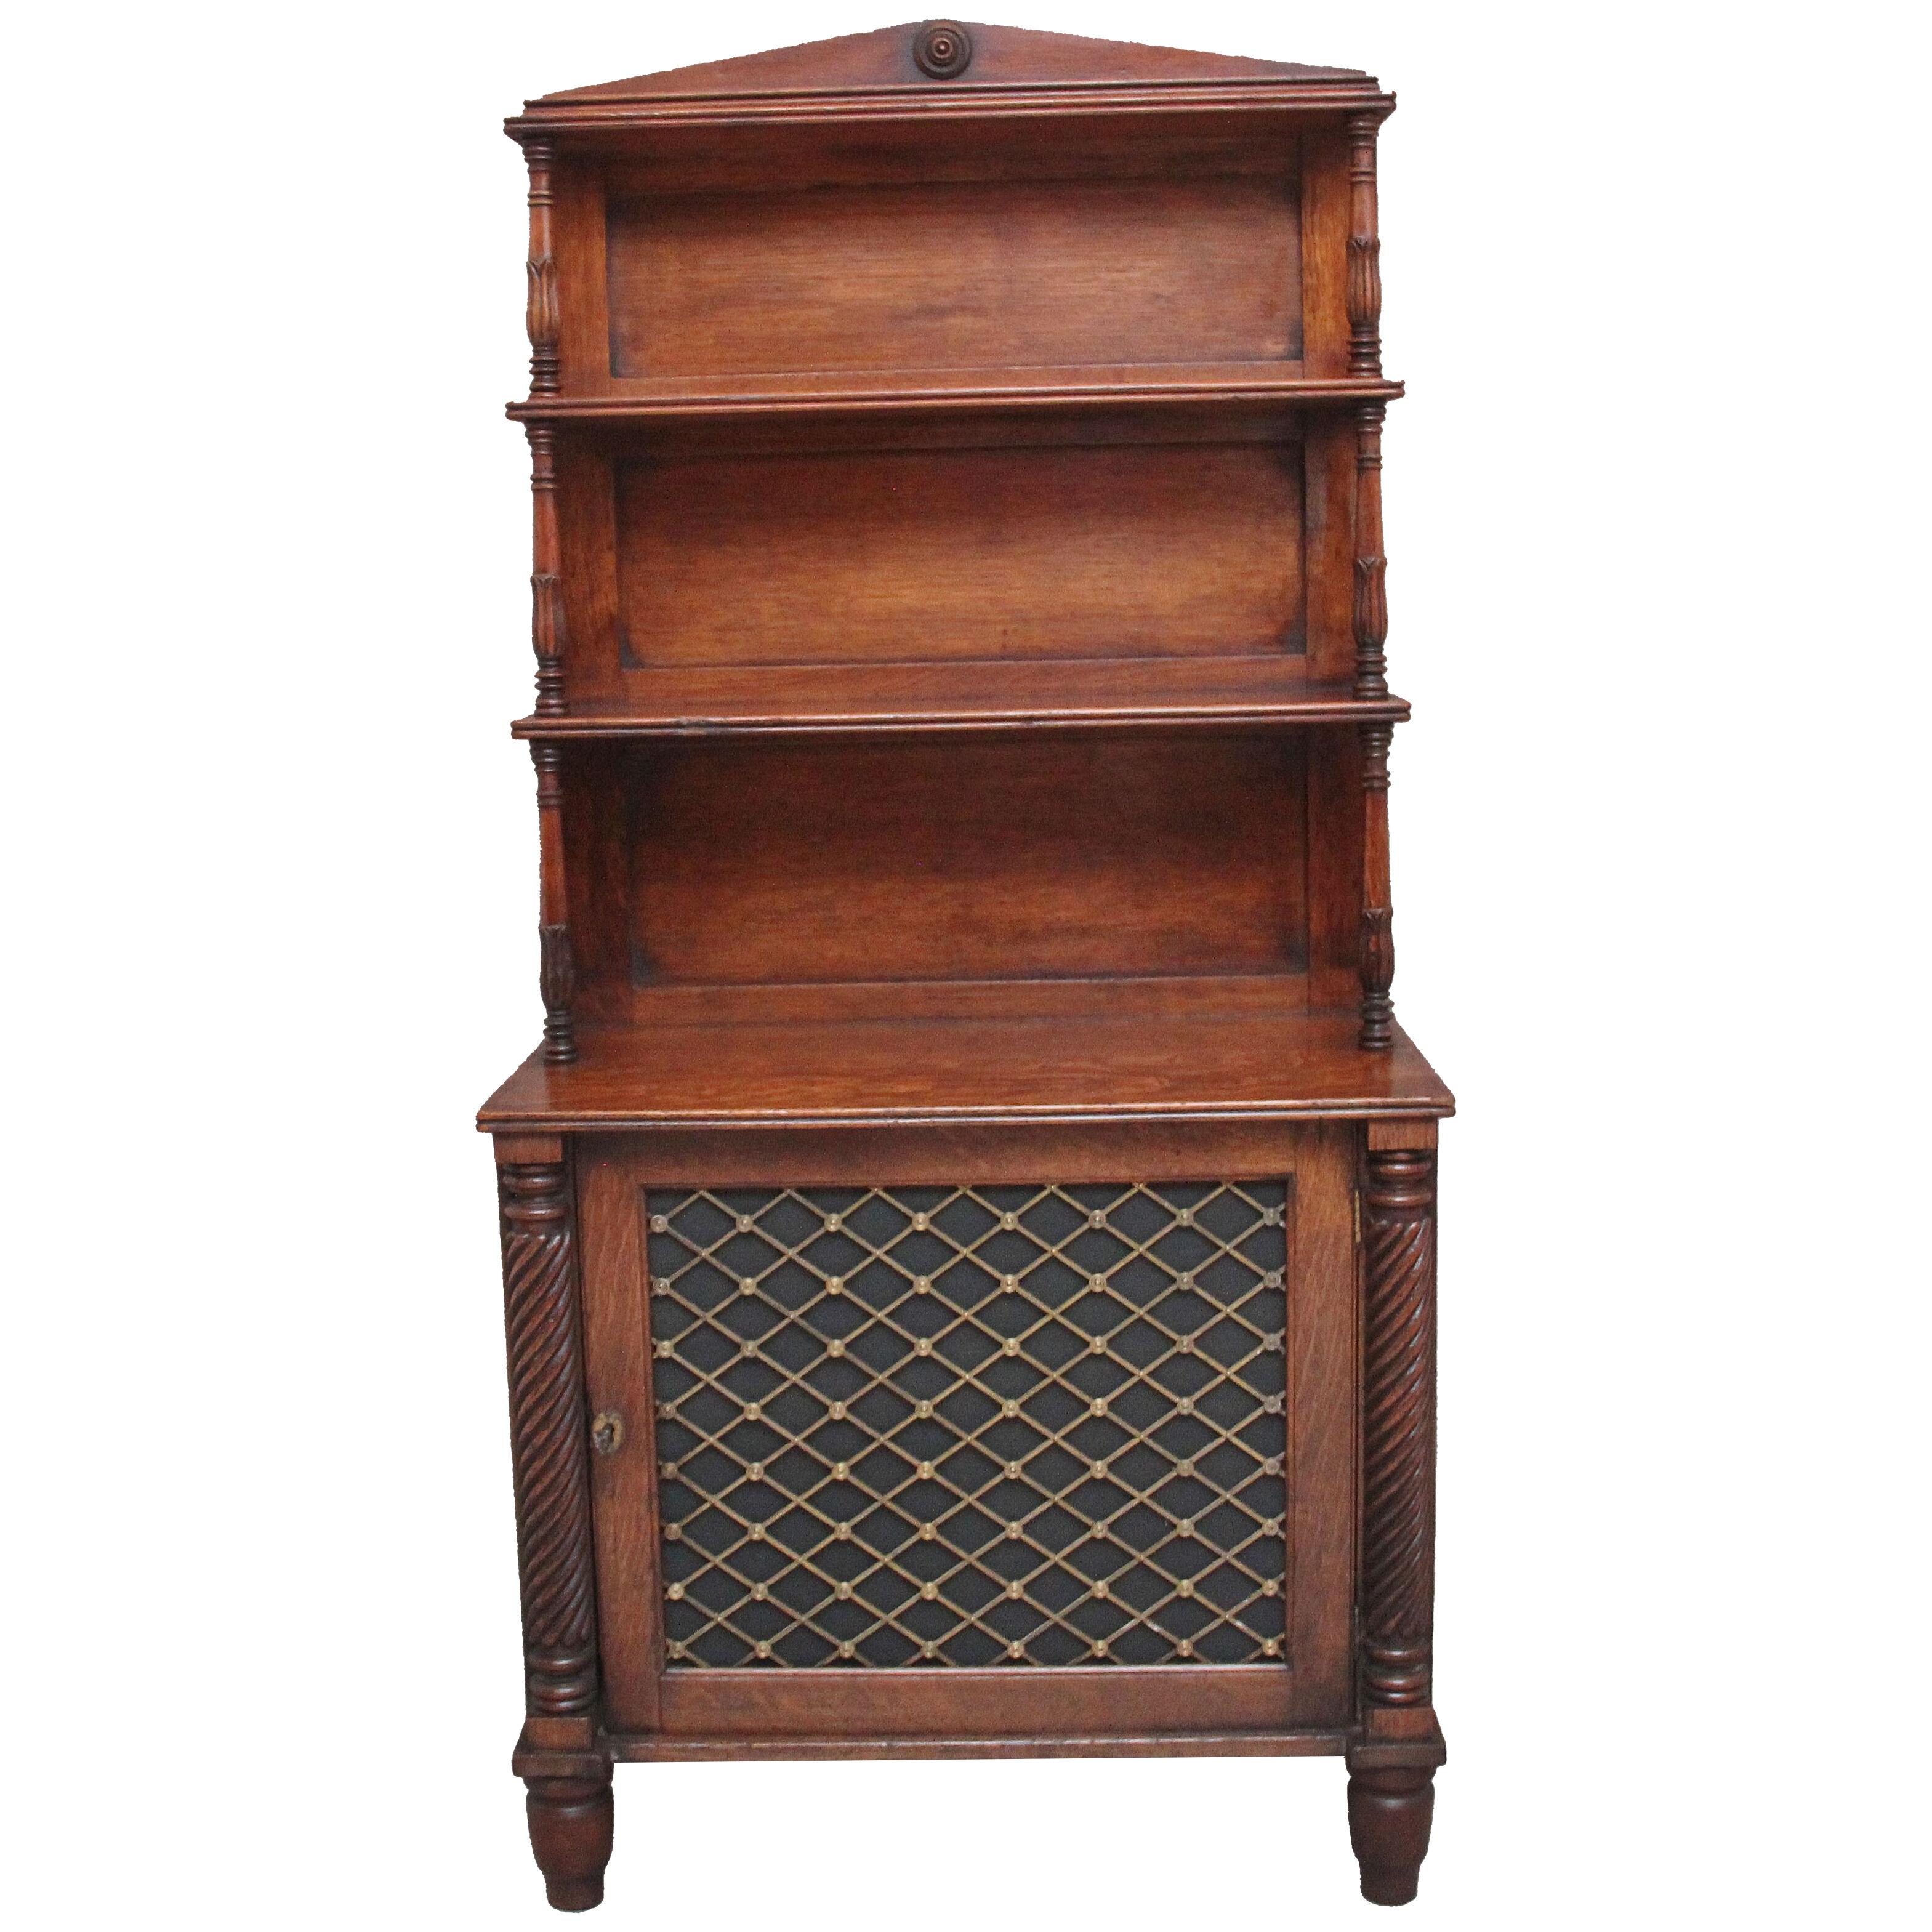 Early 19th Century oak bookcase cabinet